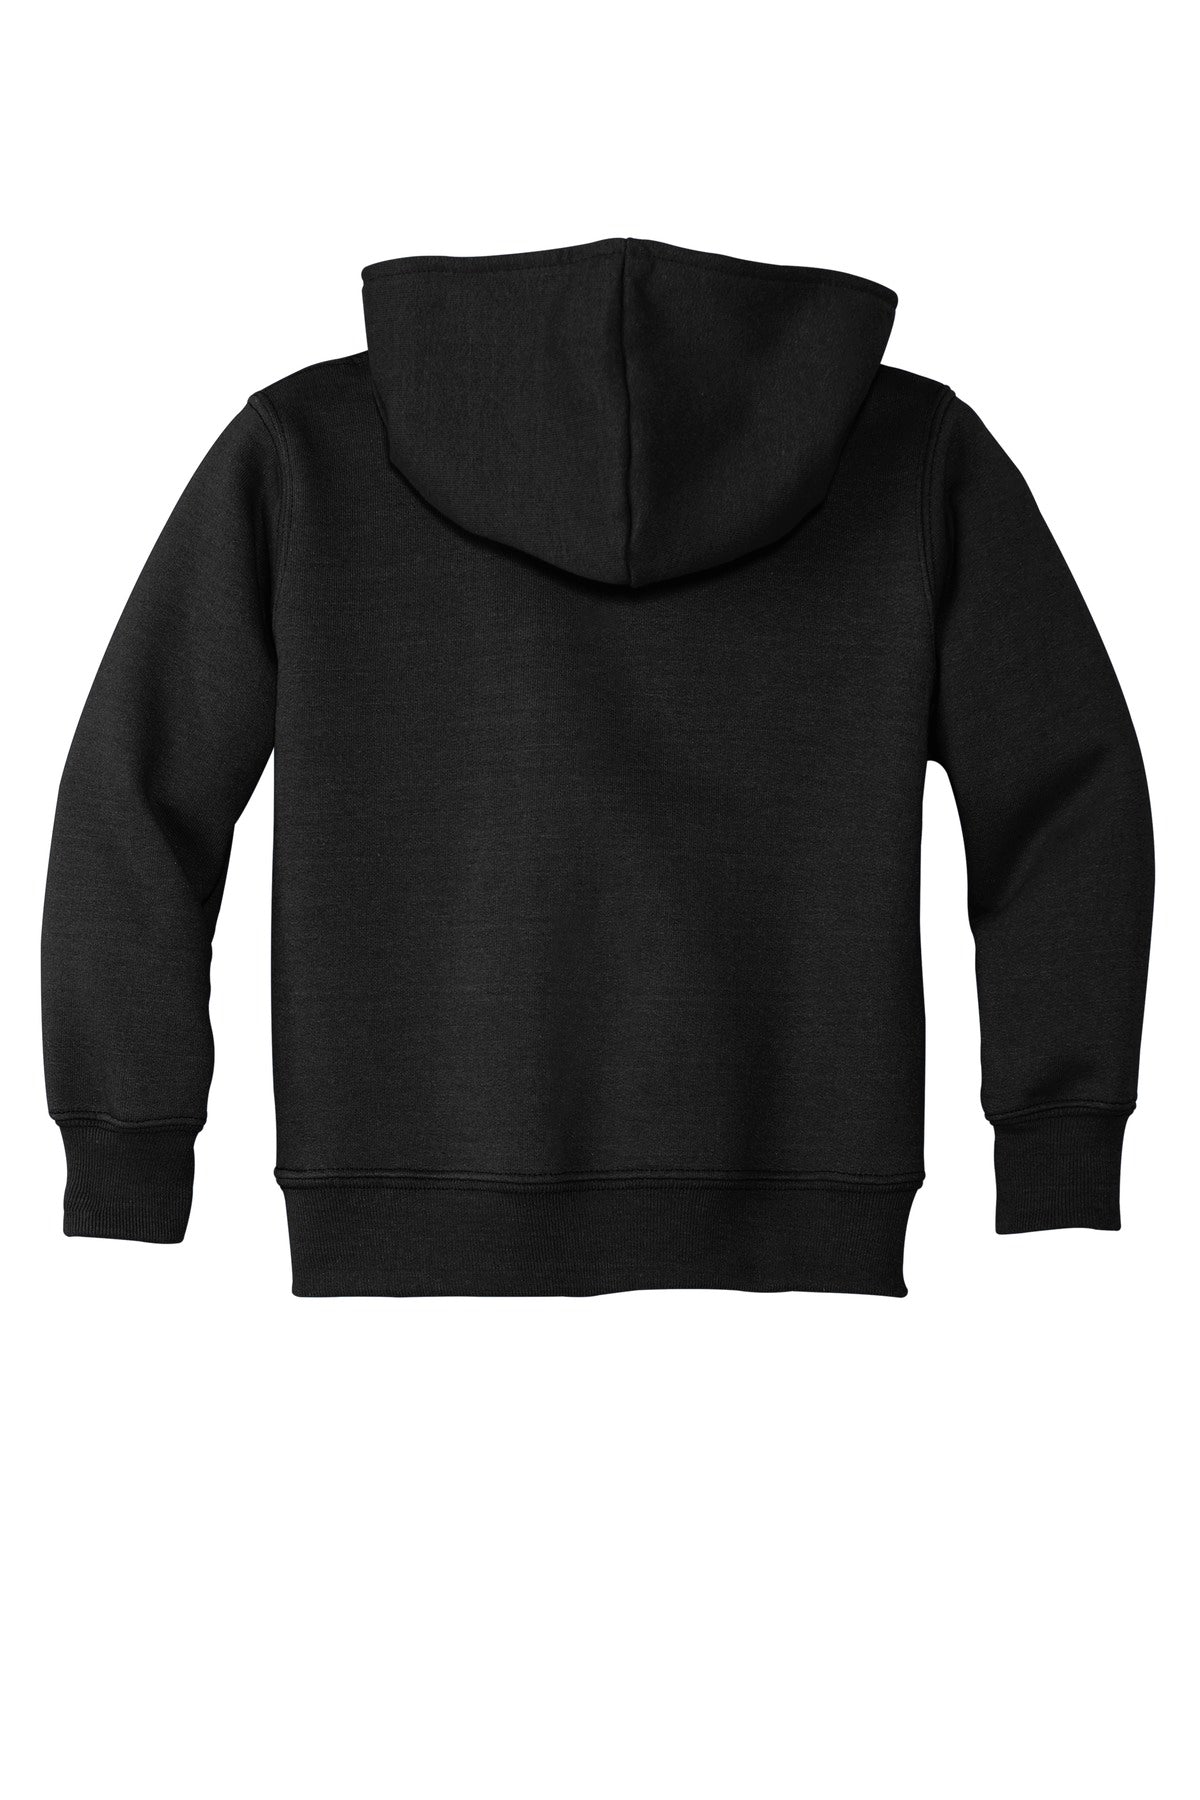 Port & Company Toddler Core Fleece Pullover Hooded Sweatshirt. CAR78TH